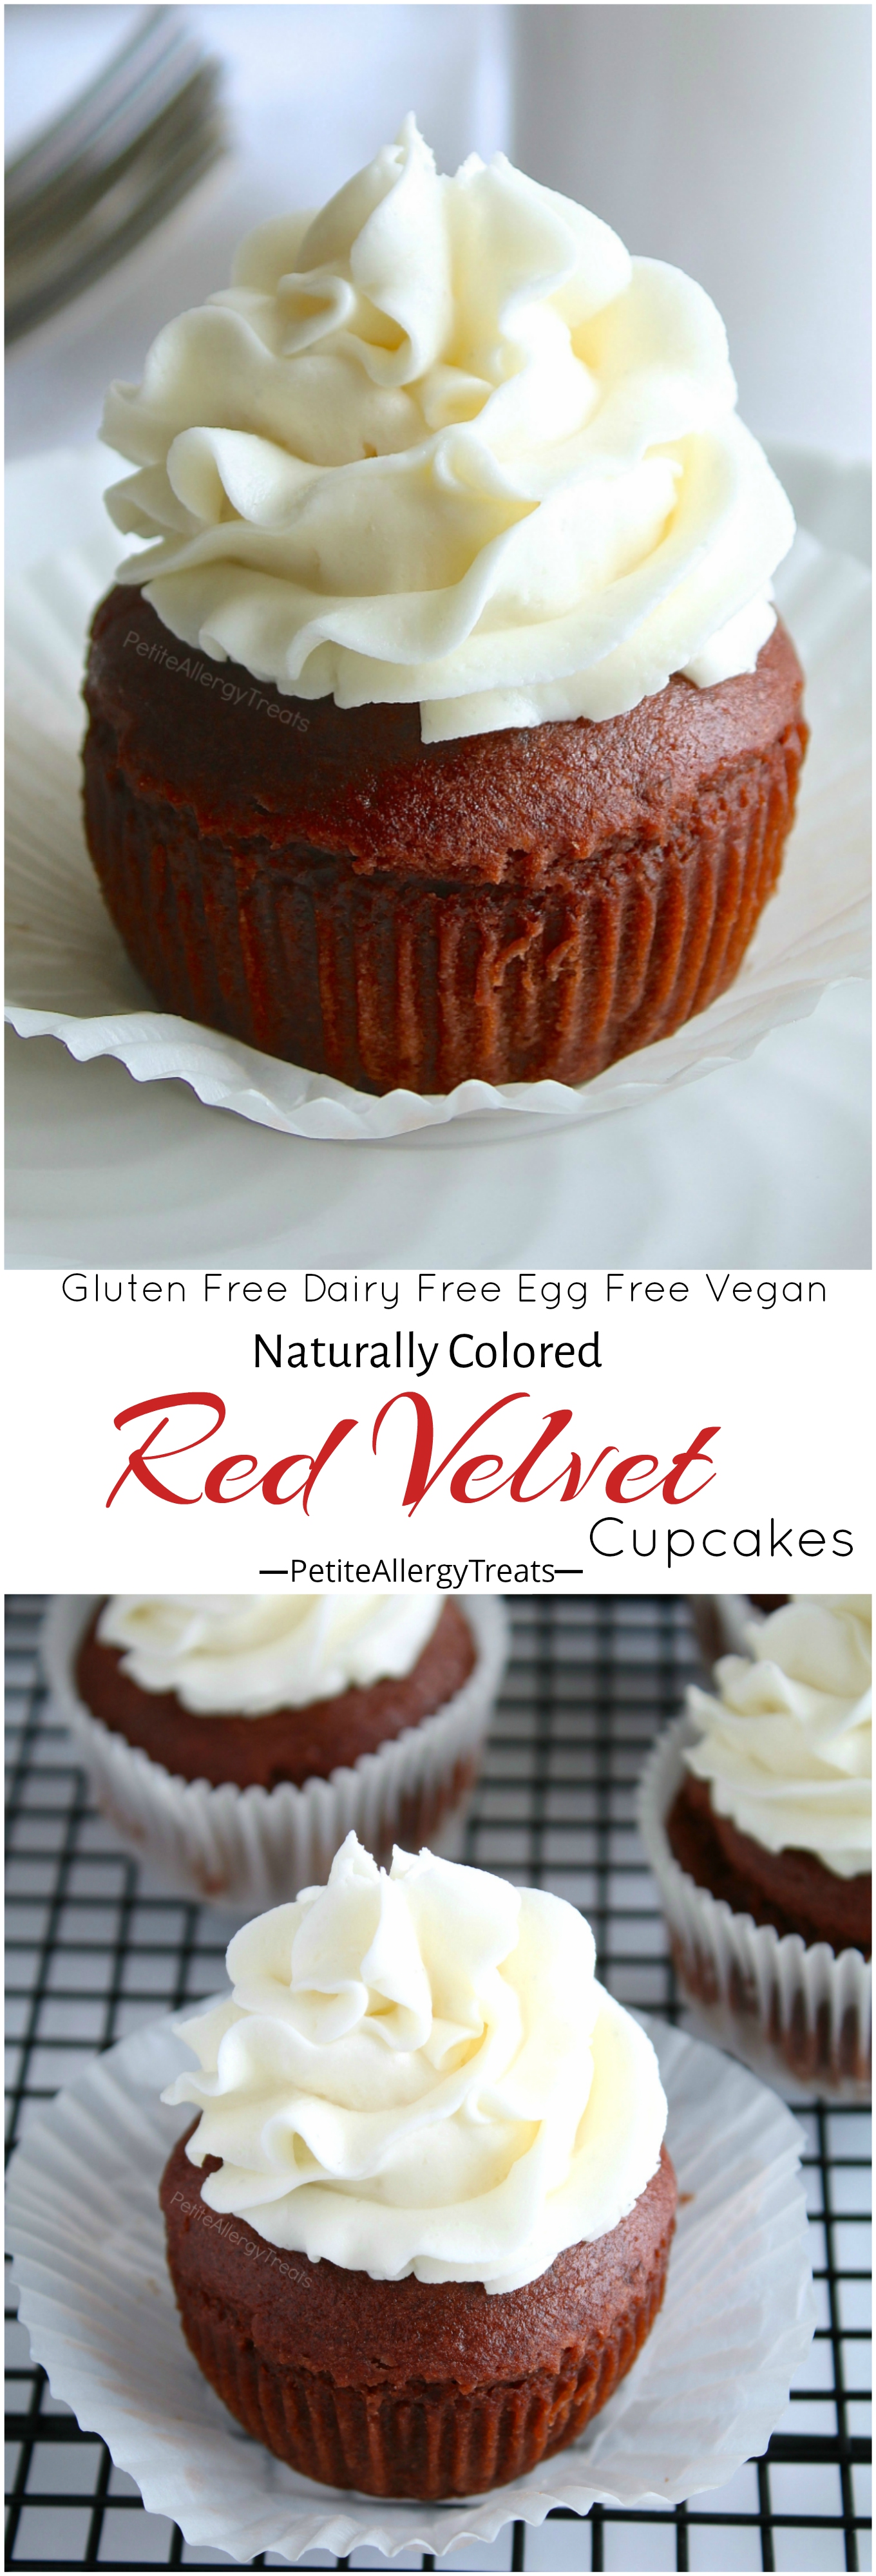 Gluten Free Red Velvet Cupcakes Recipe (vegan dye-free)- Naturally colored red velvet cupcakes made dairy free, egg free and Vegan. Food Allergy friendly!